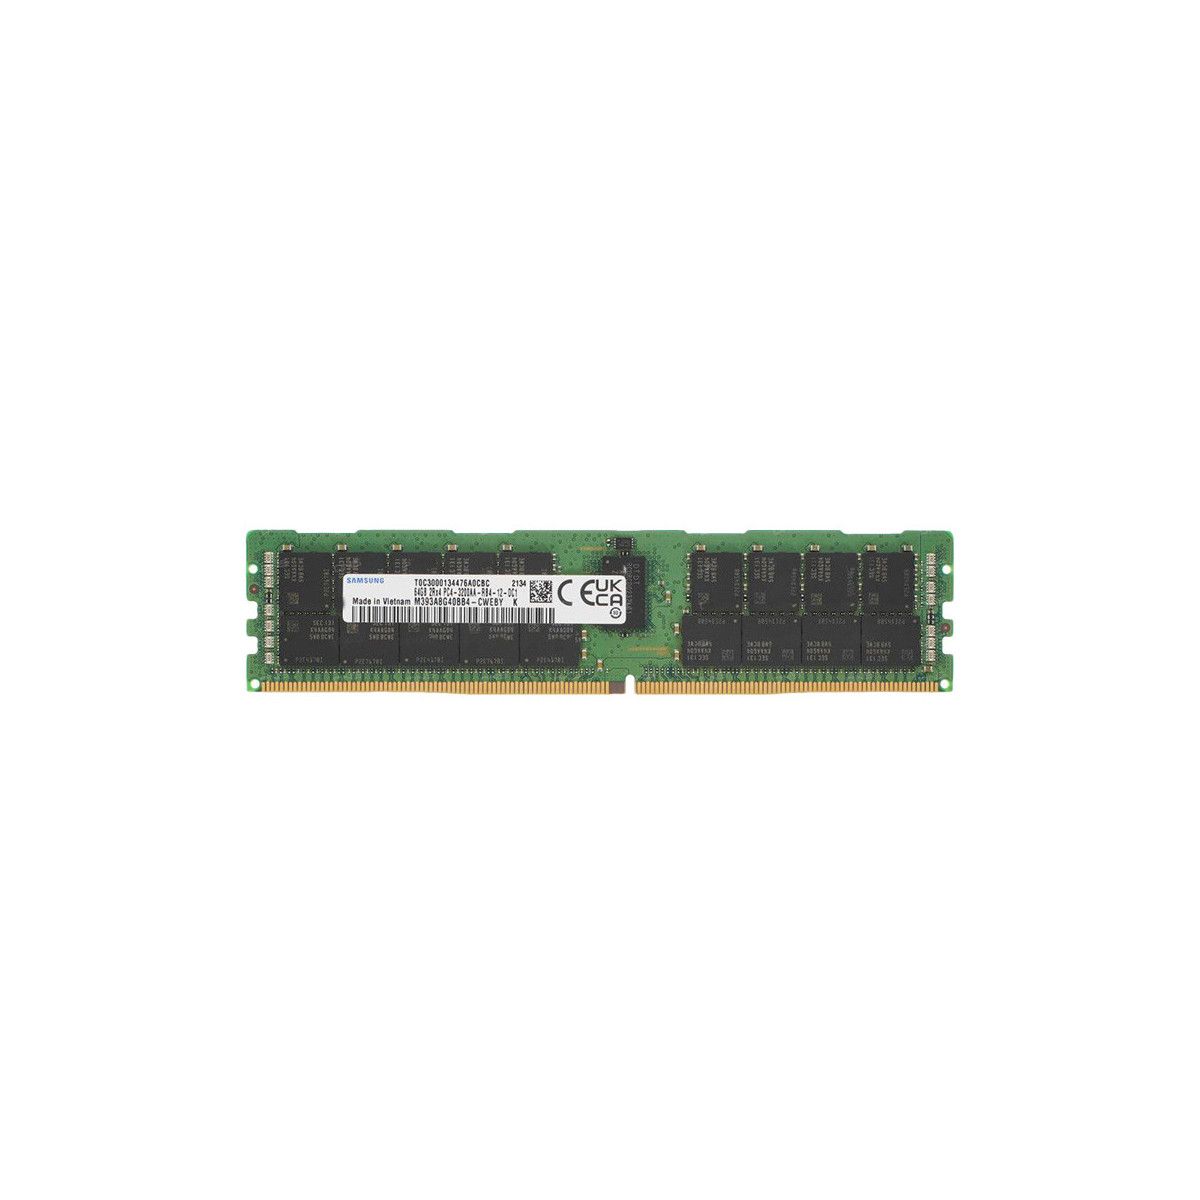 P2MYX-MS - Memstar 1x 64GB DDR4-3200 RDIMM PC4-25600R - Mem-Star Compatible OEM Mémoire 1 - Memstar 